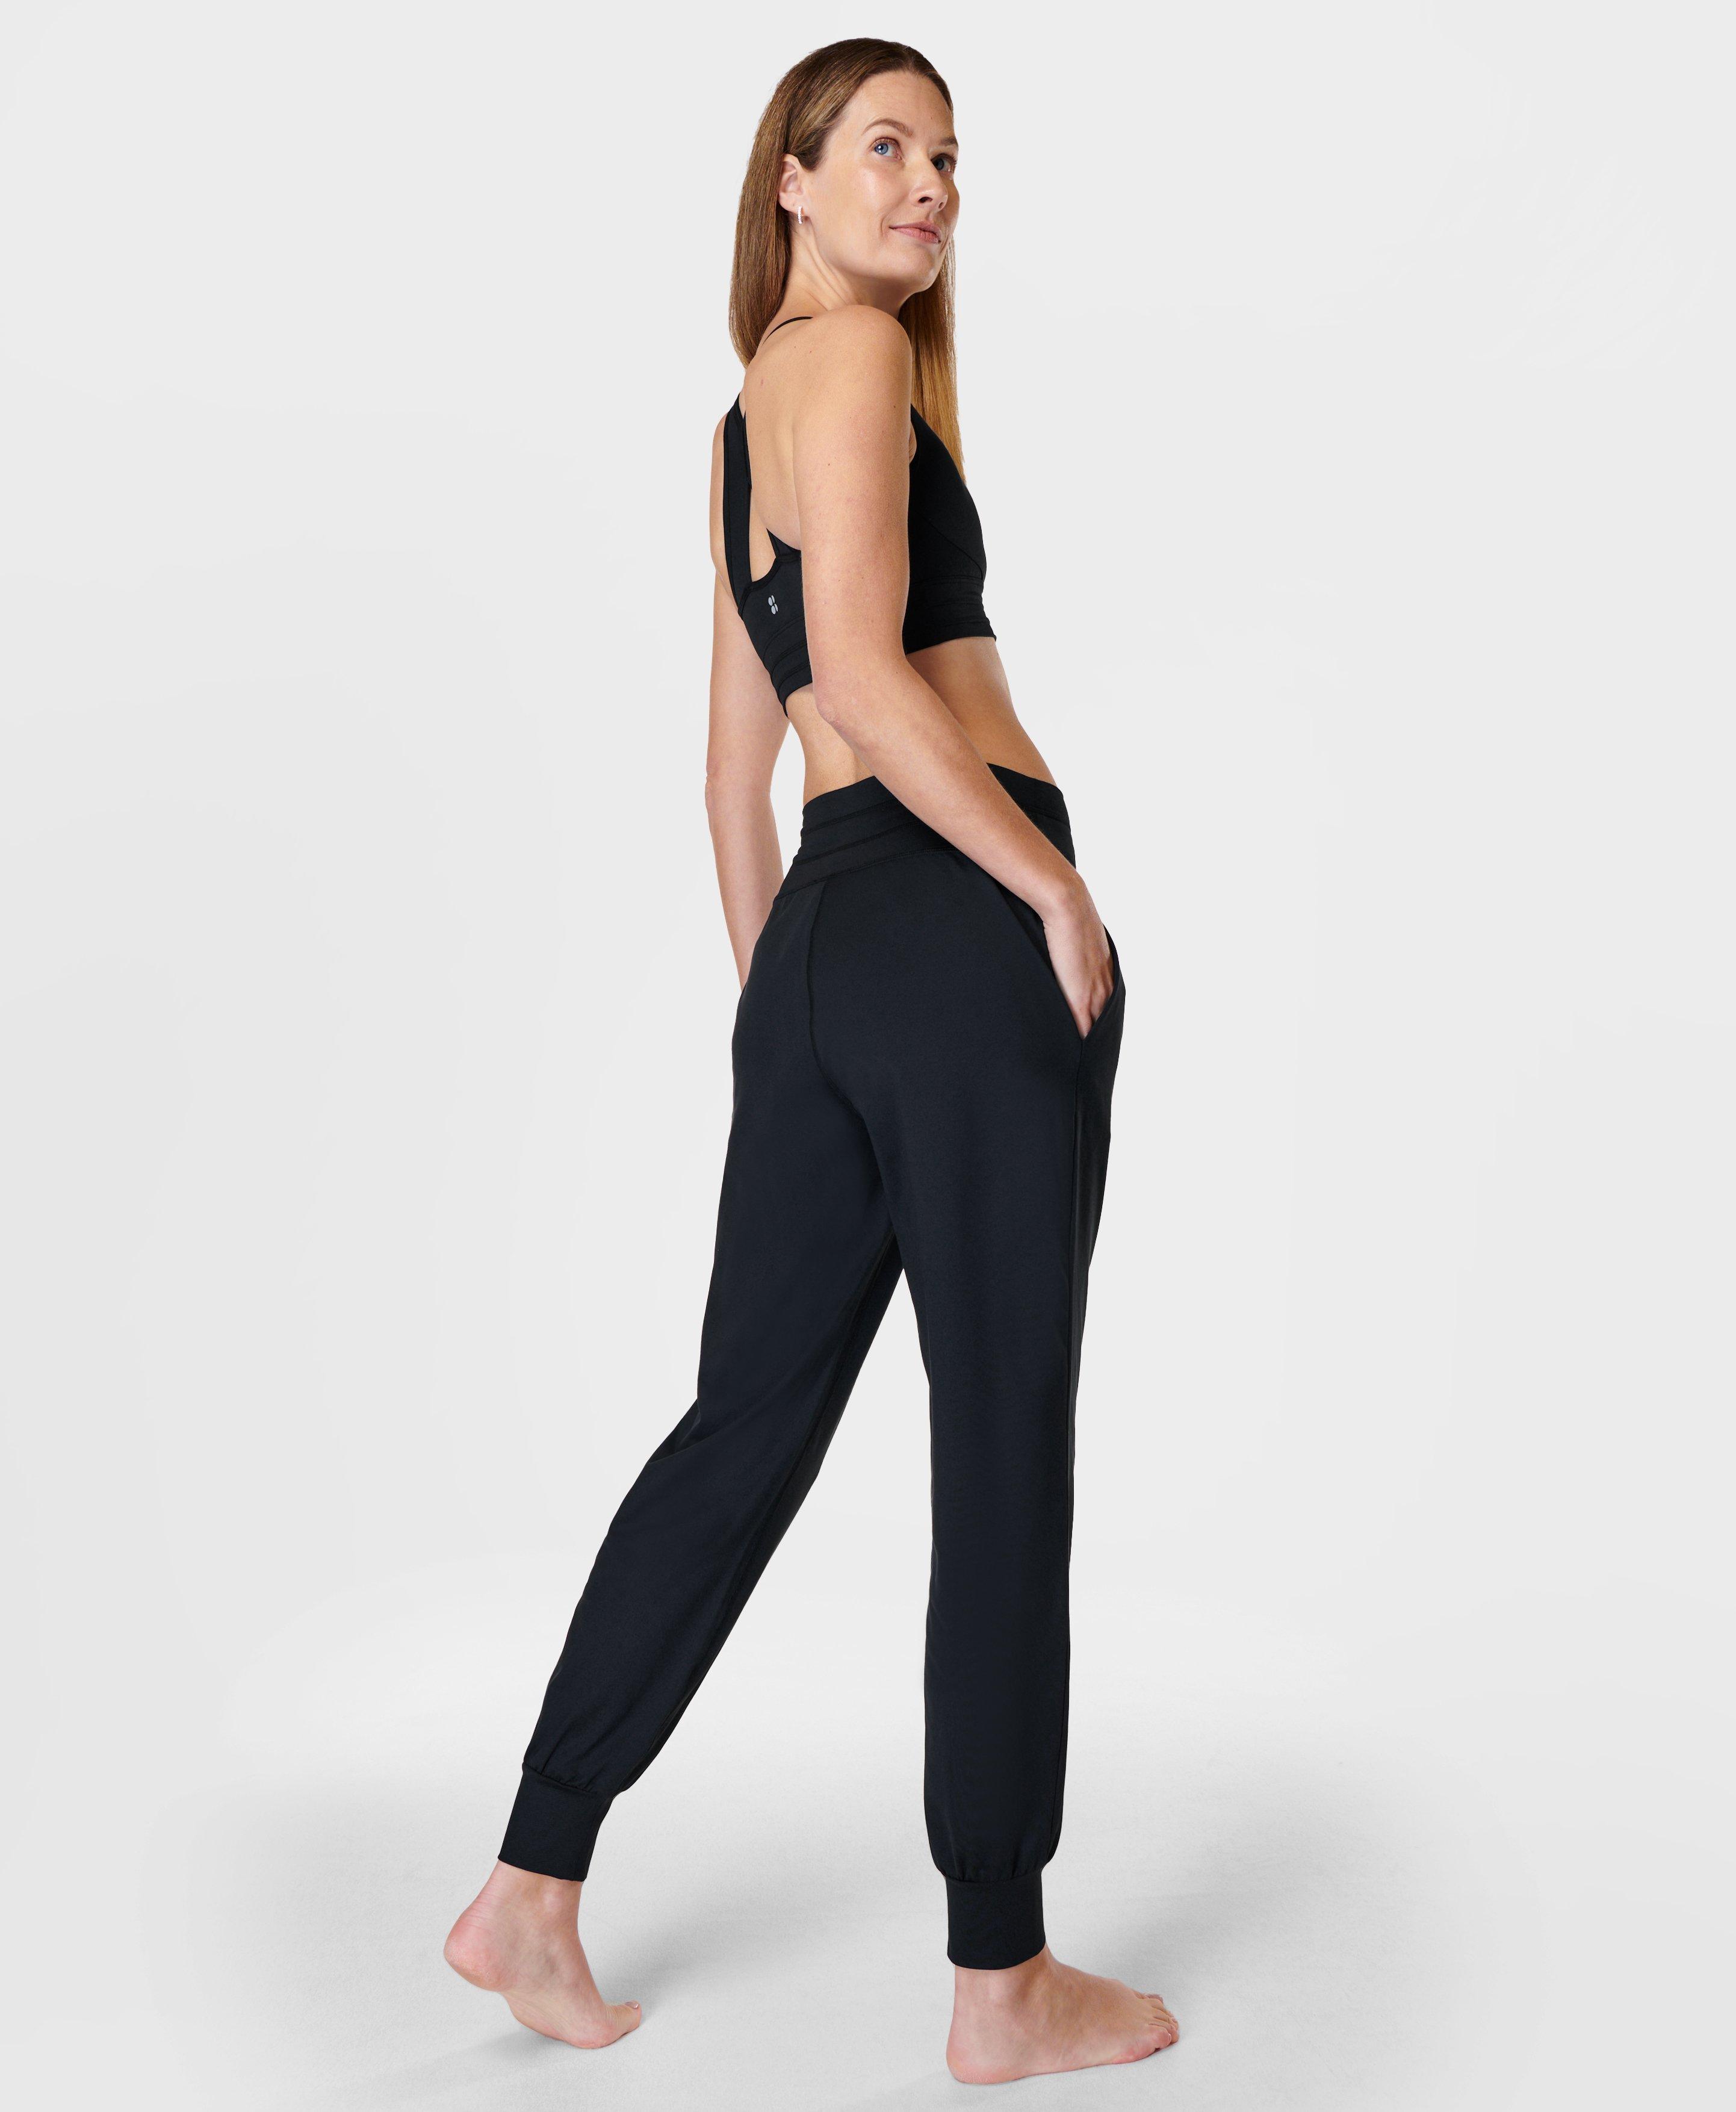 Gaia Yoga Pants - Black, Women's Pants